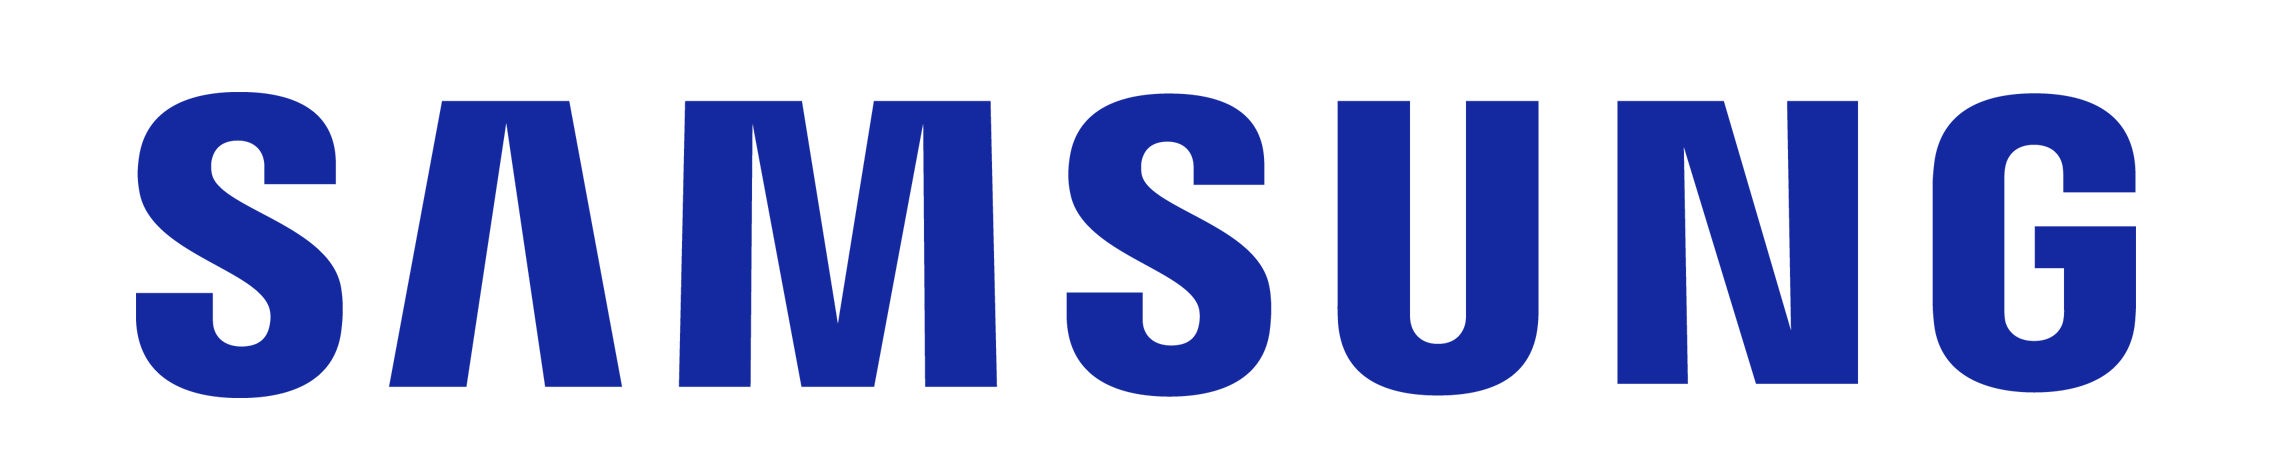 samsung-logo-png-1286